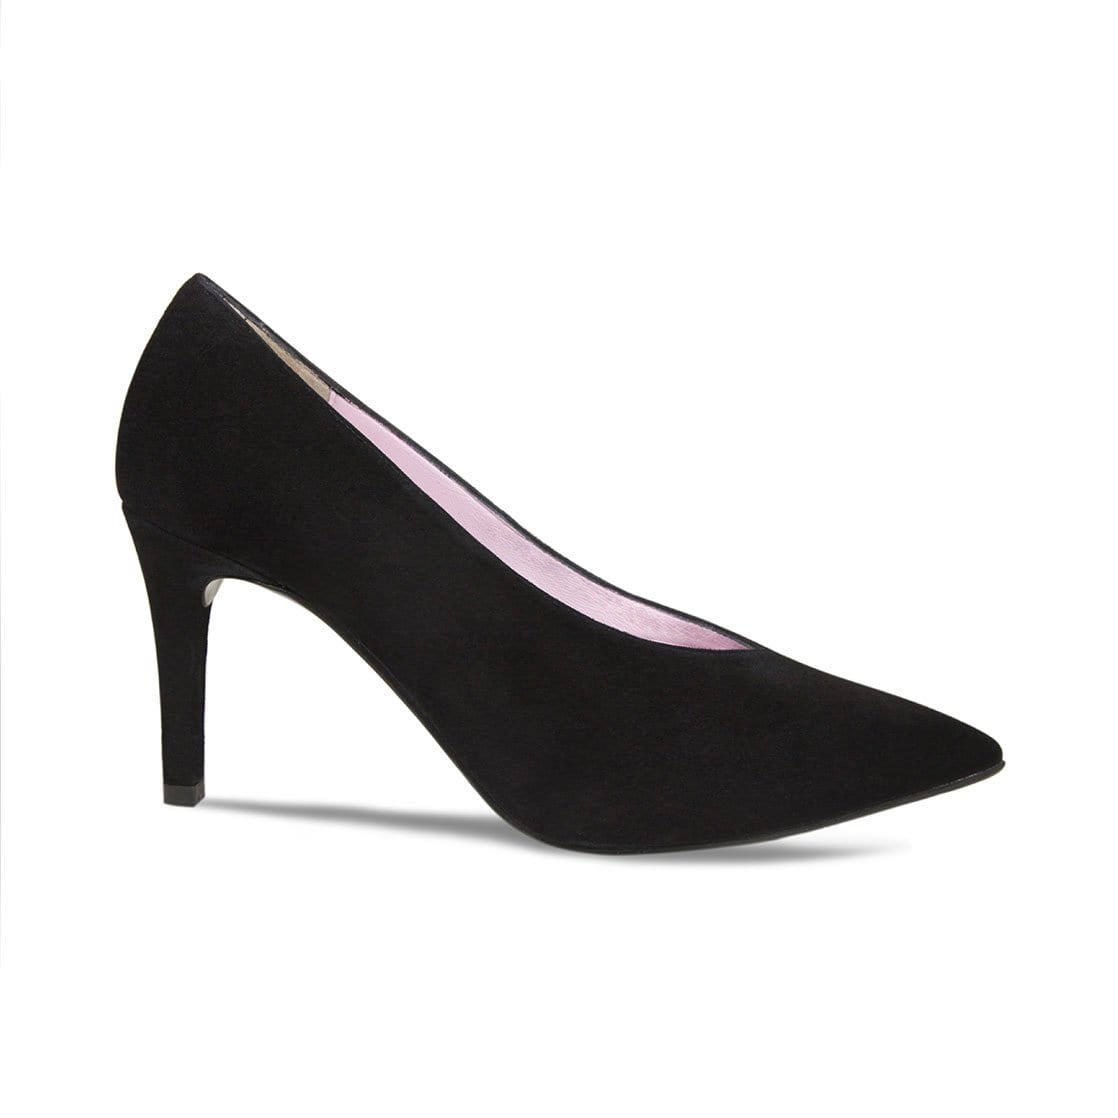 Female Legs in Black High Heels Shoes Black Stockings Fashion Stock Photo -  Image of elegance, fetish: 136815806